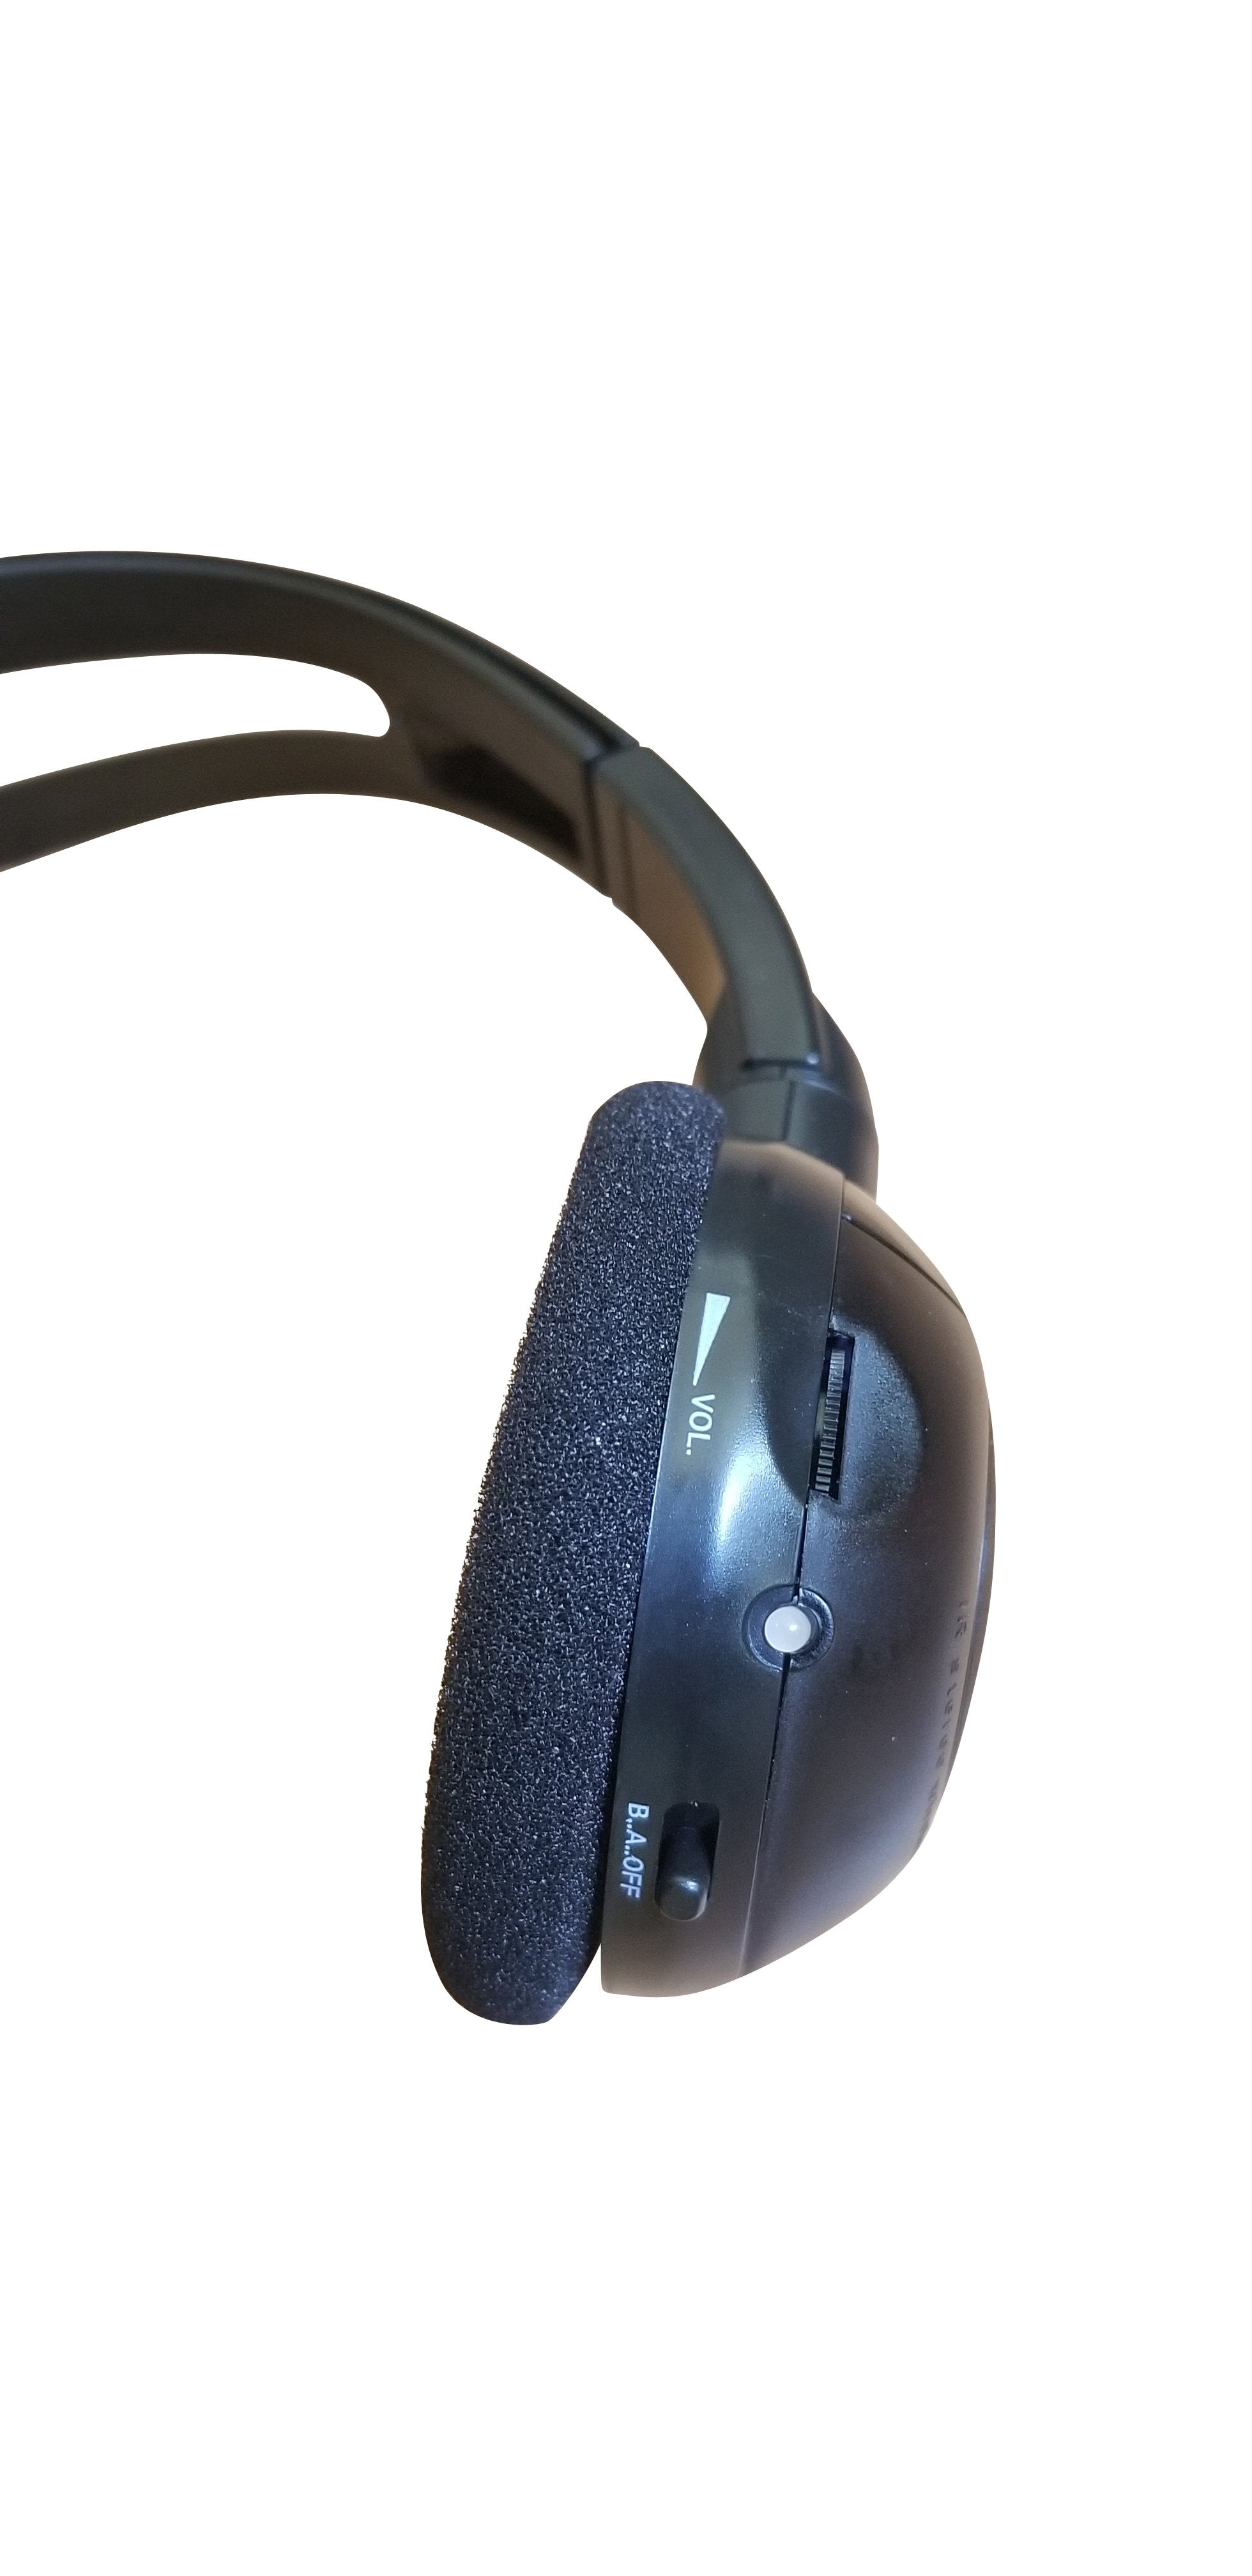 2017 Infiniti QX30 Wireless DVD Headphone